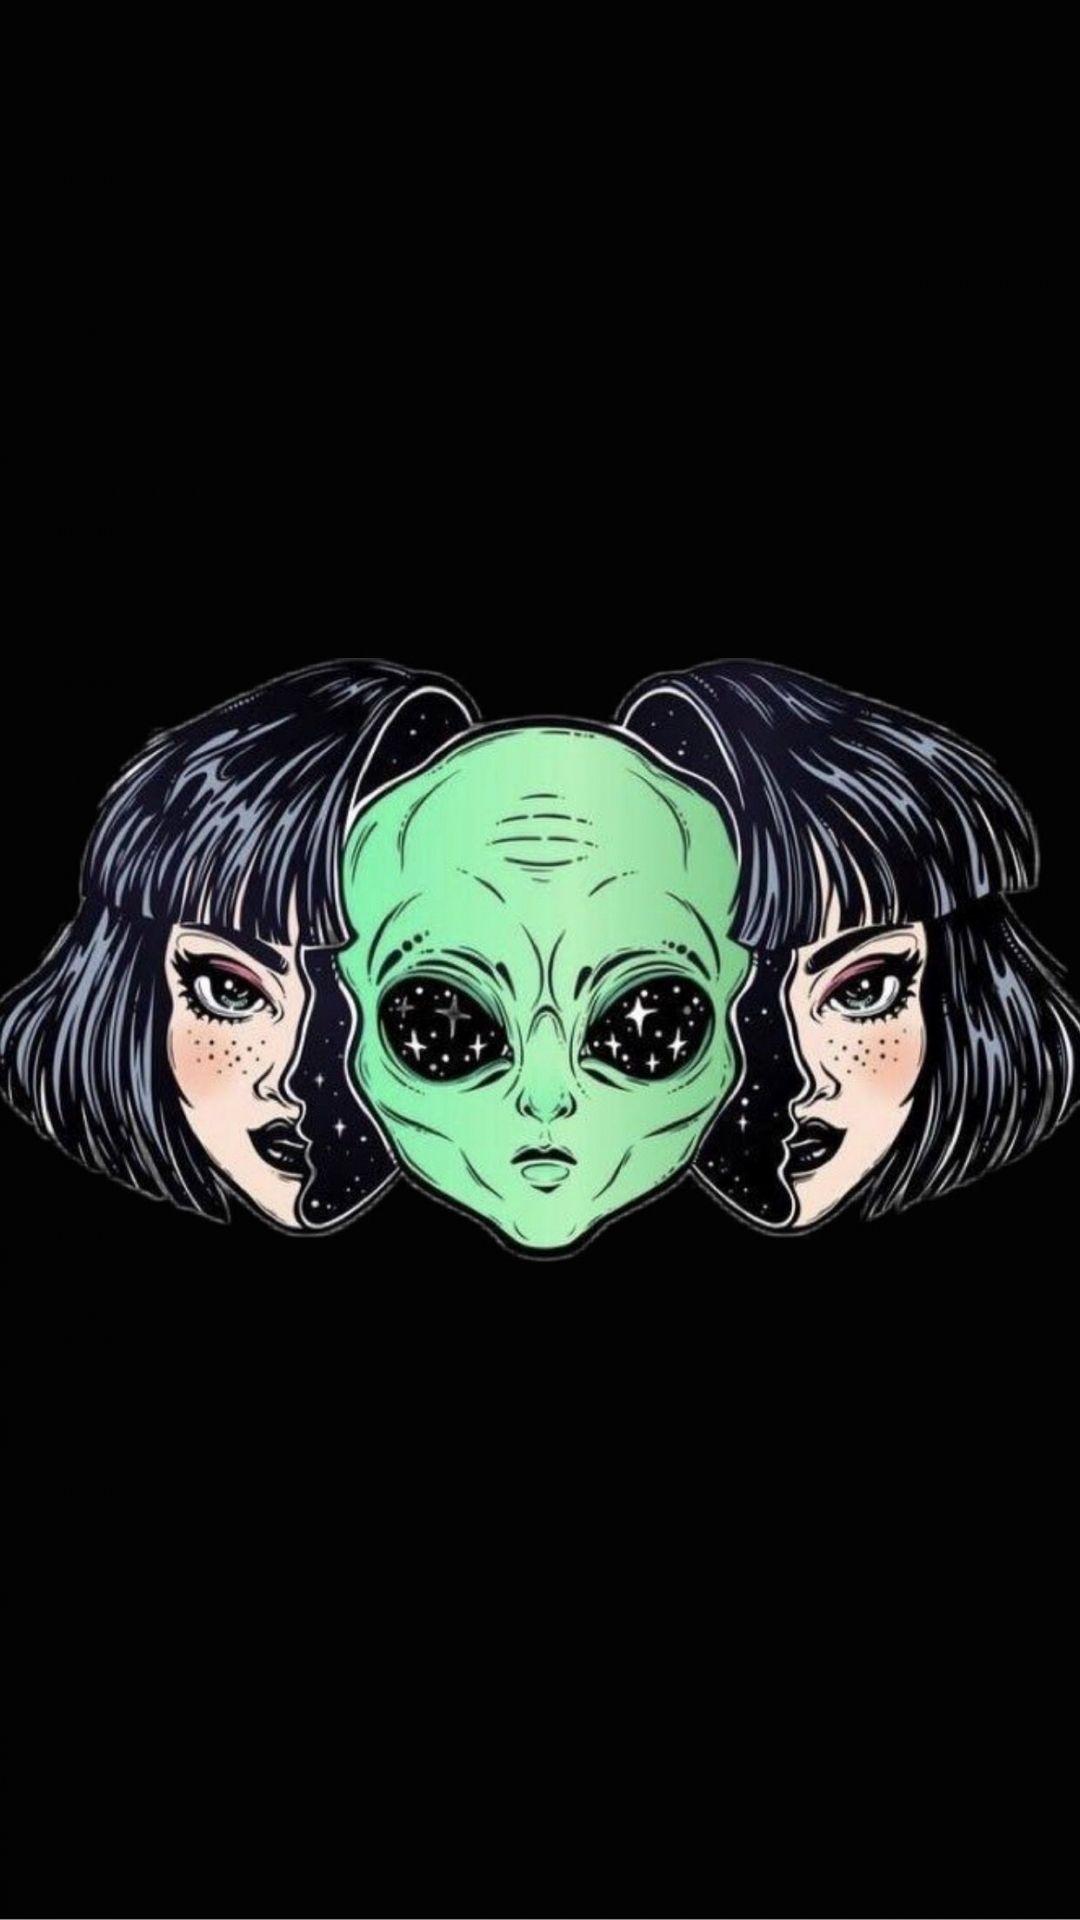 Anime Alien Wallpapers - Top Free Anime Alien Backgrounds - WallpaperAccess